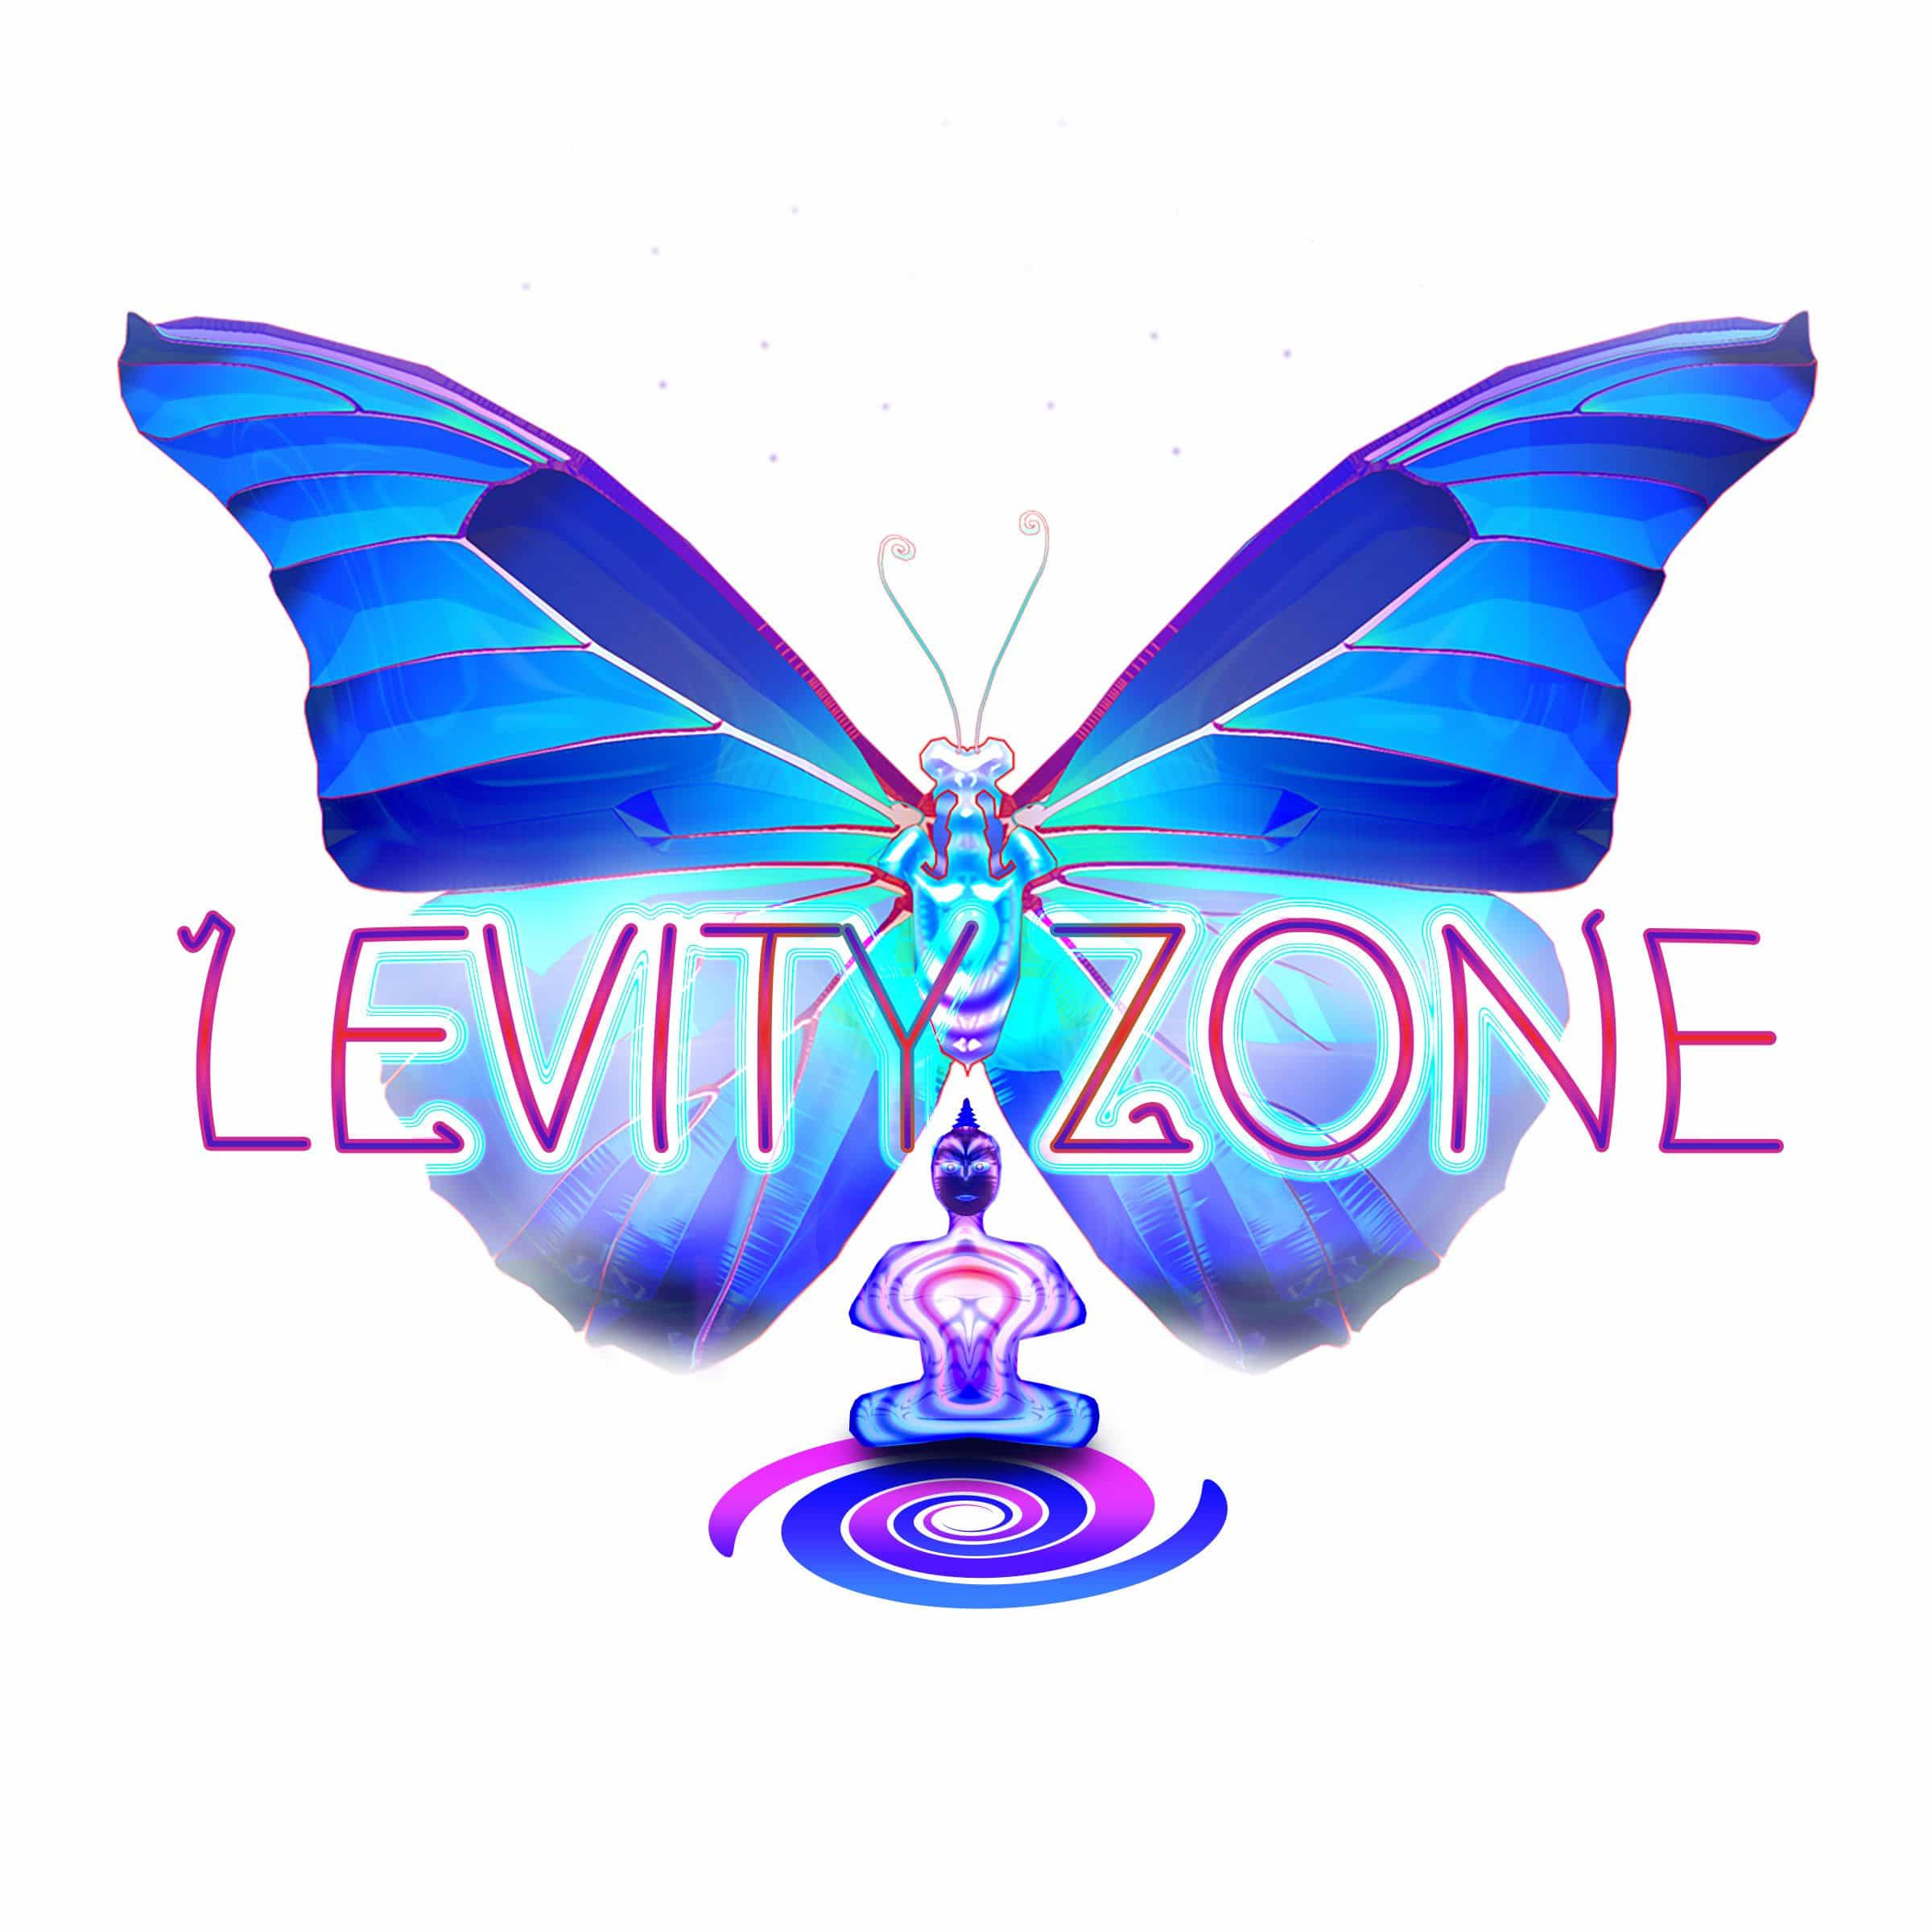 Levity Zone Podcast